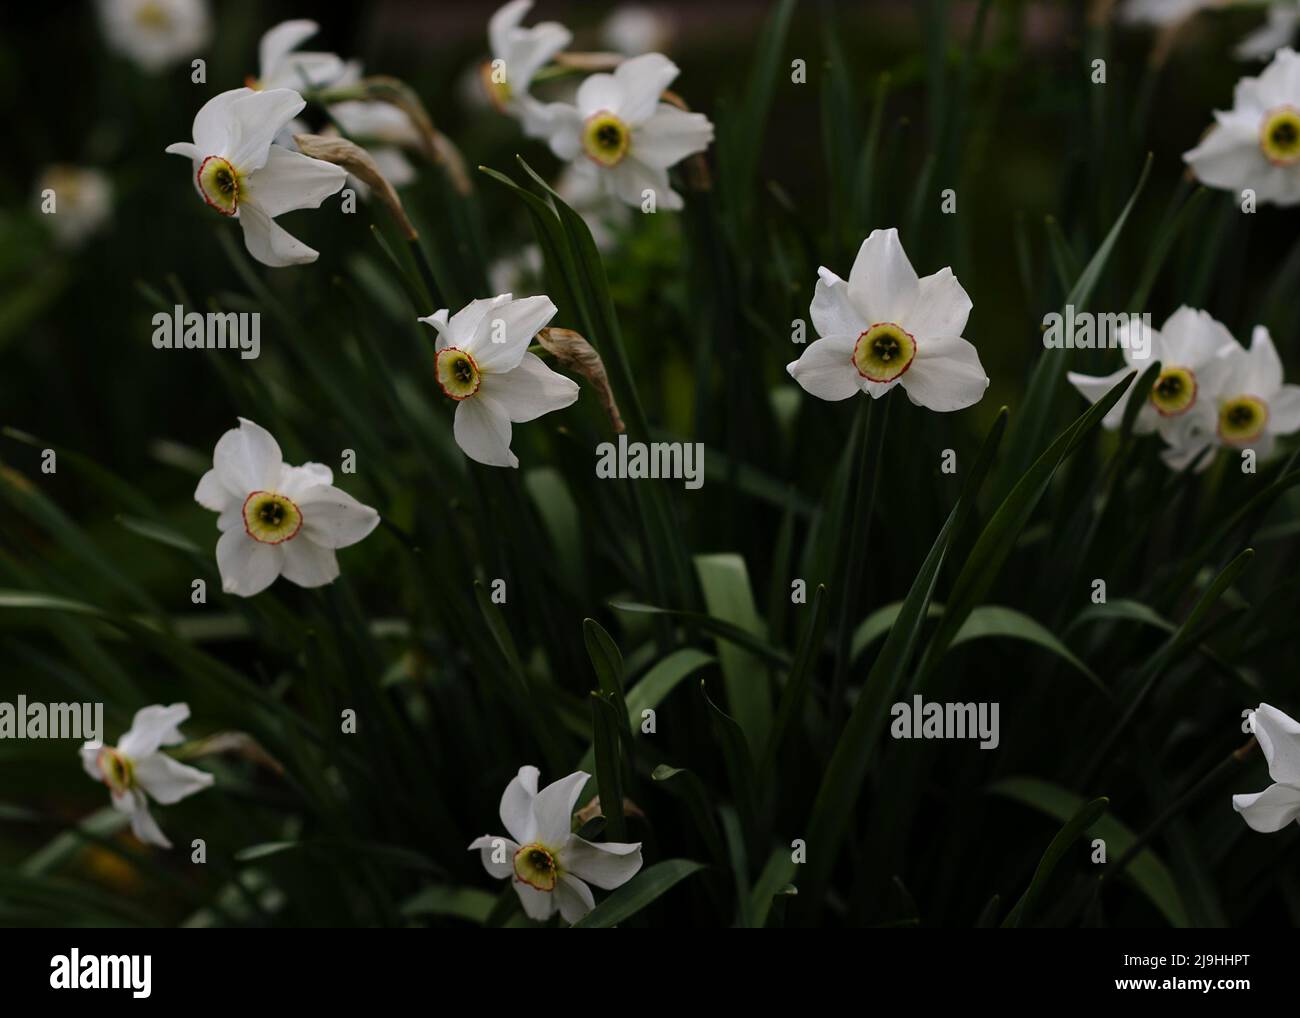 white daffodil flowers in the flower garden Stock Photo